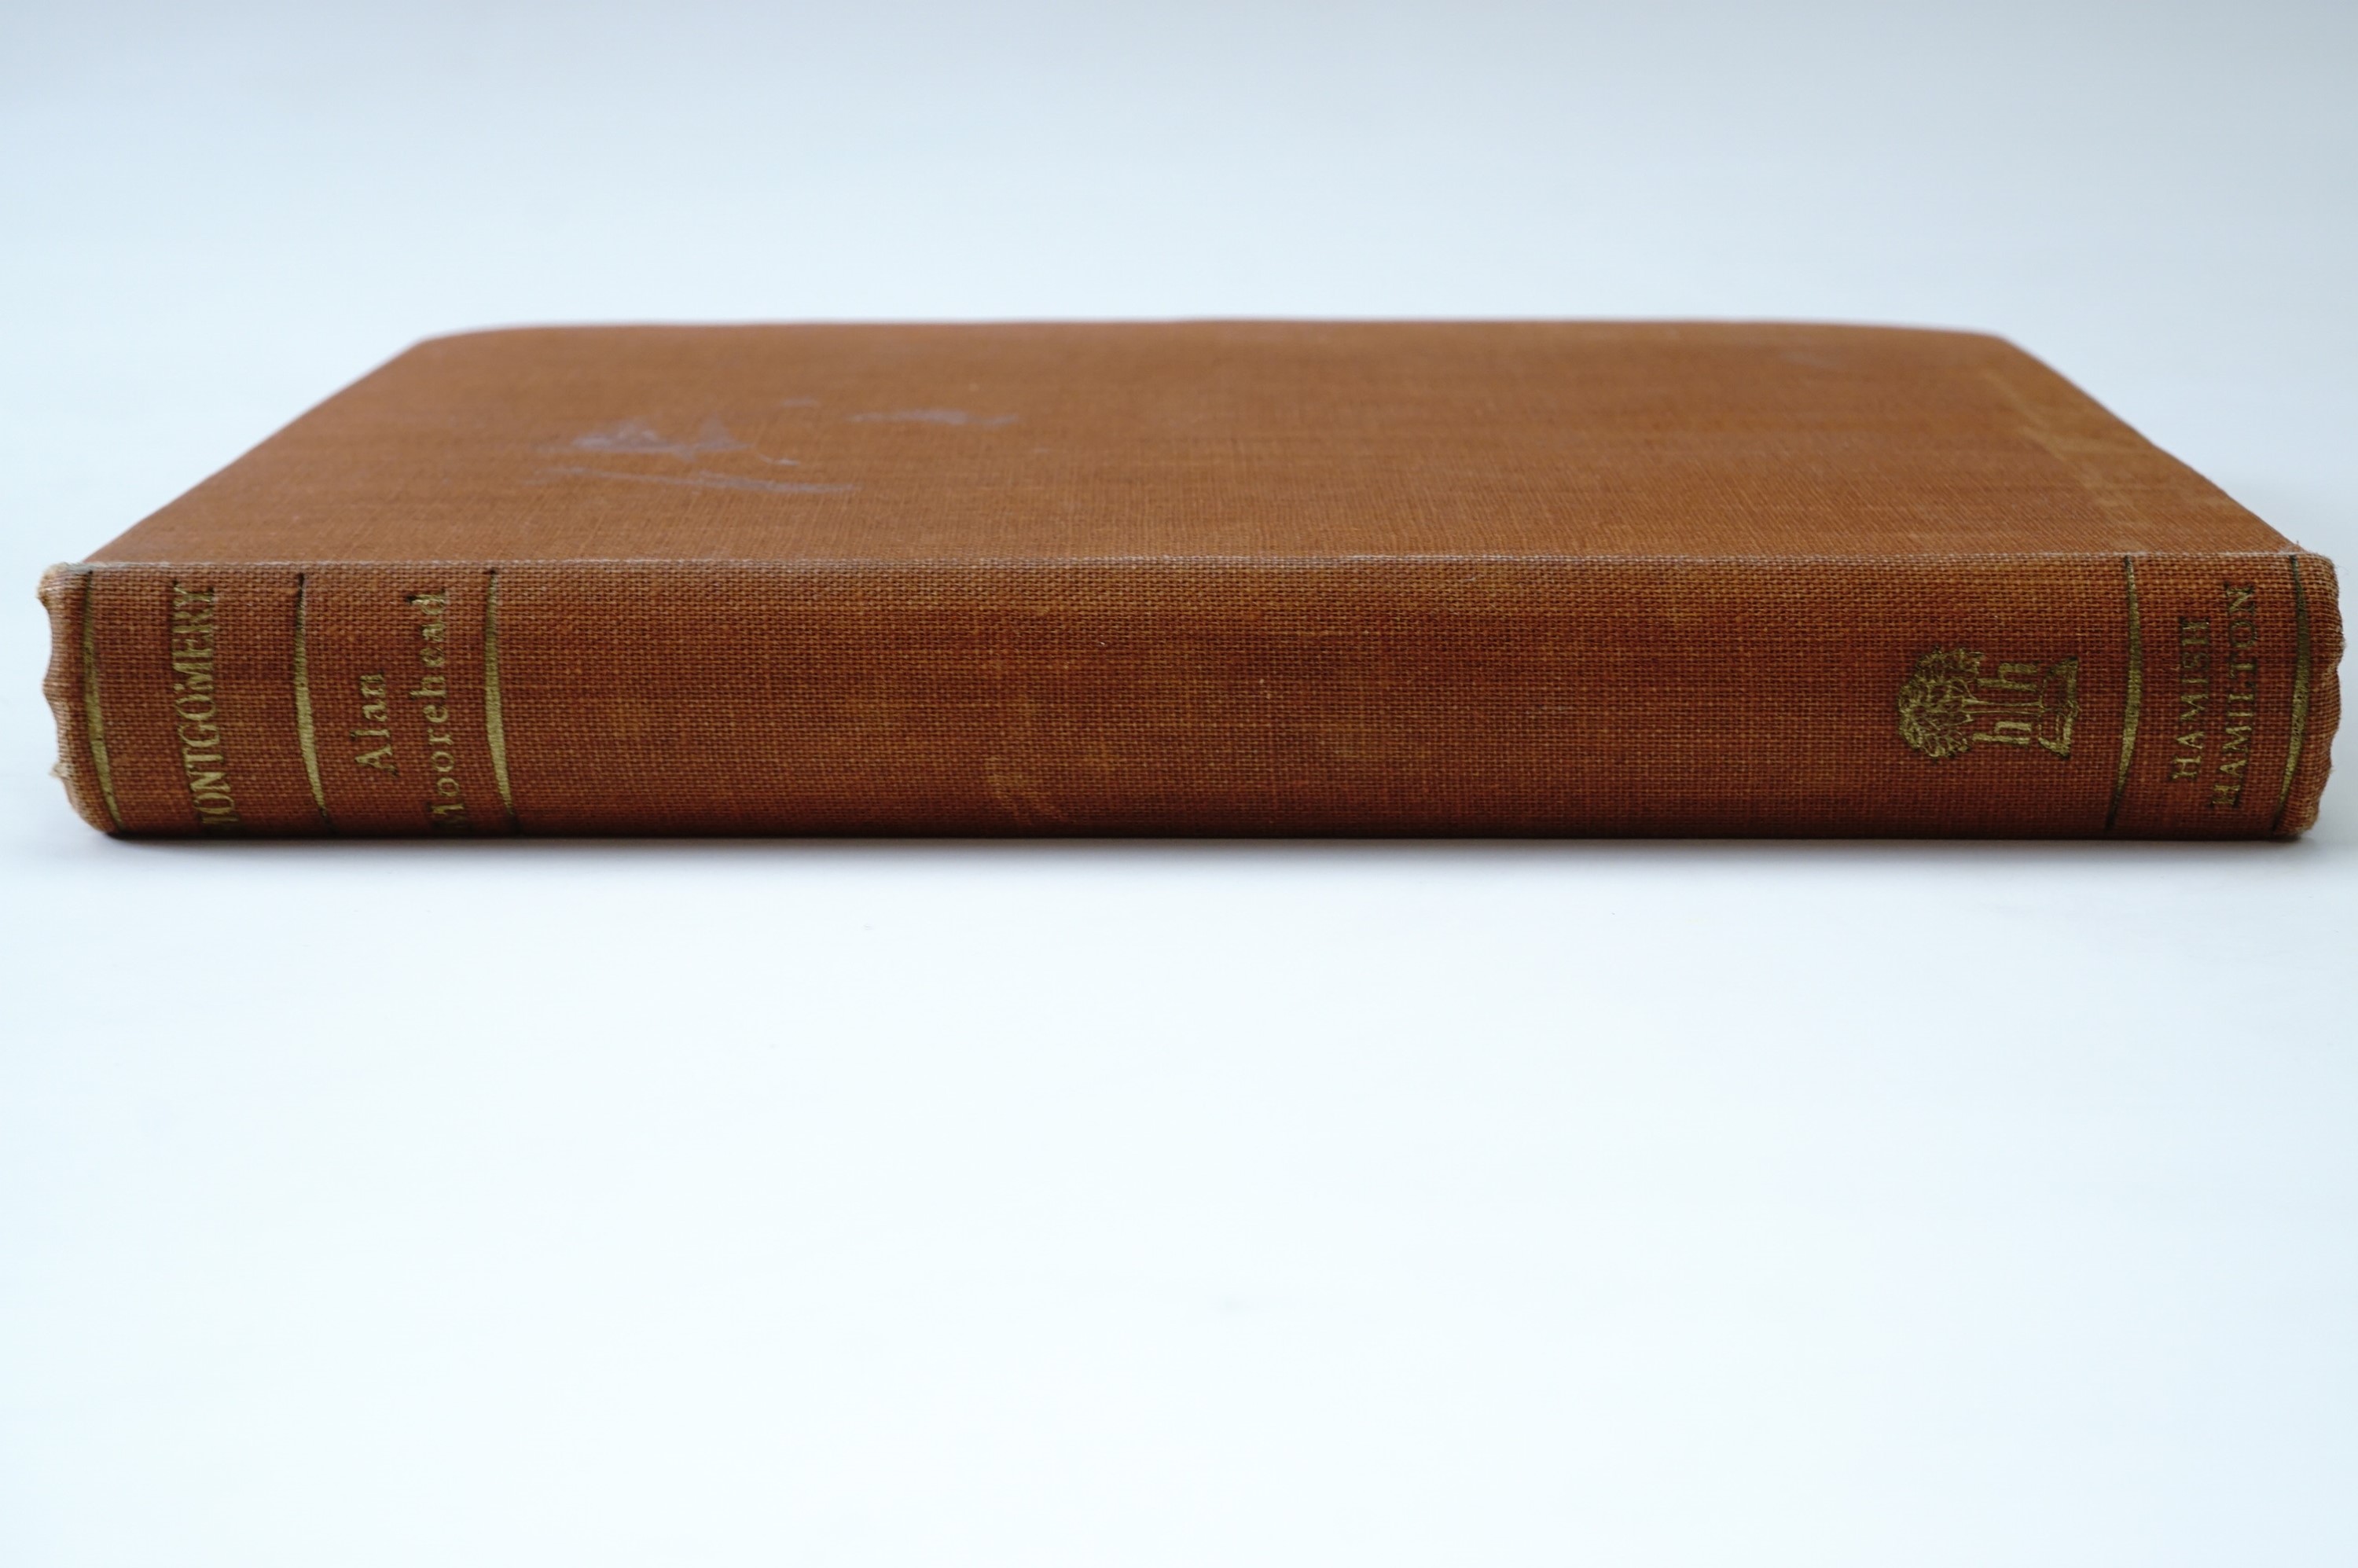 Alan Moorehead, "Montgomery, A Biography", 1946, Hamish Hamilton Ltd, London, 21 x 14.5 cm